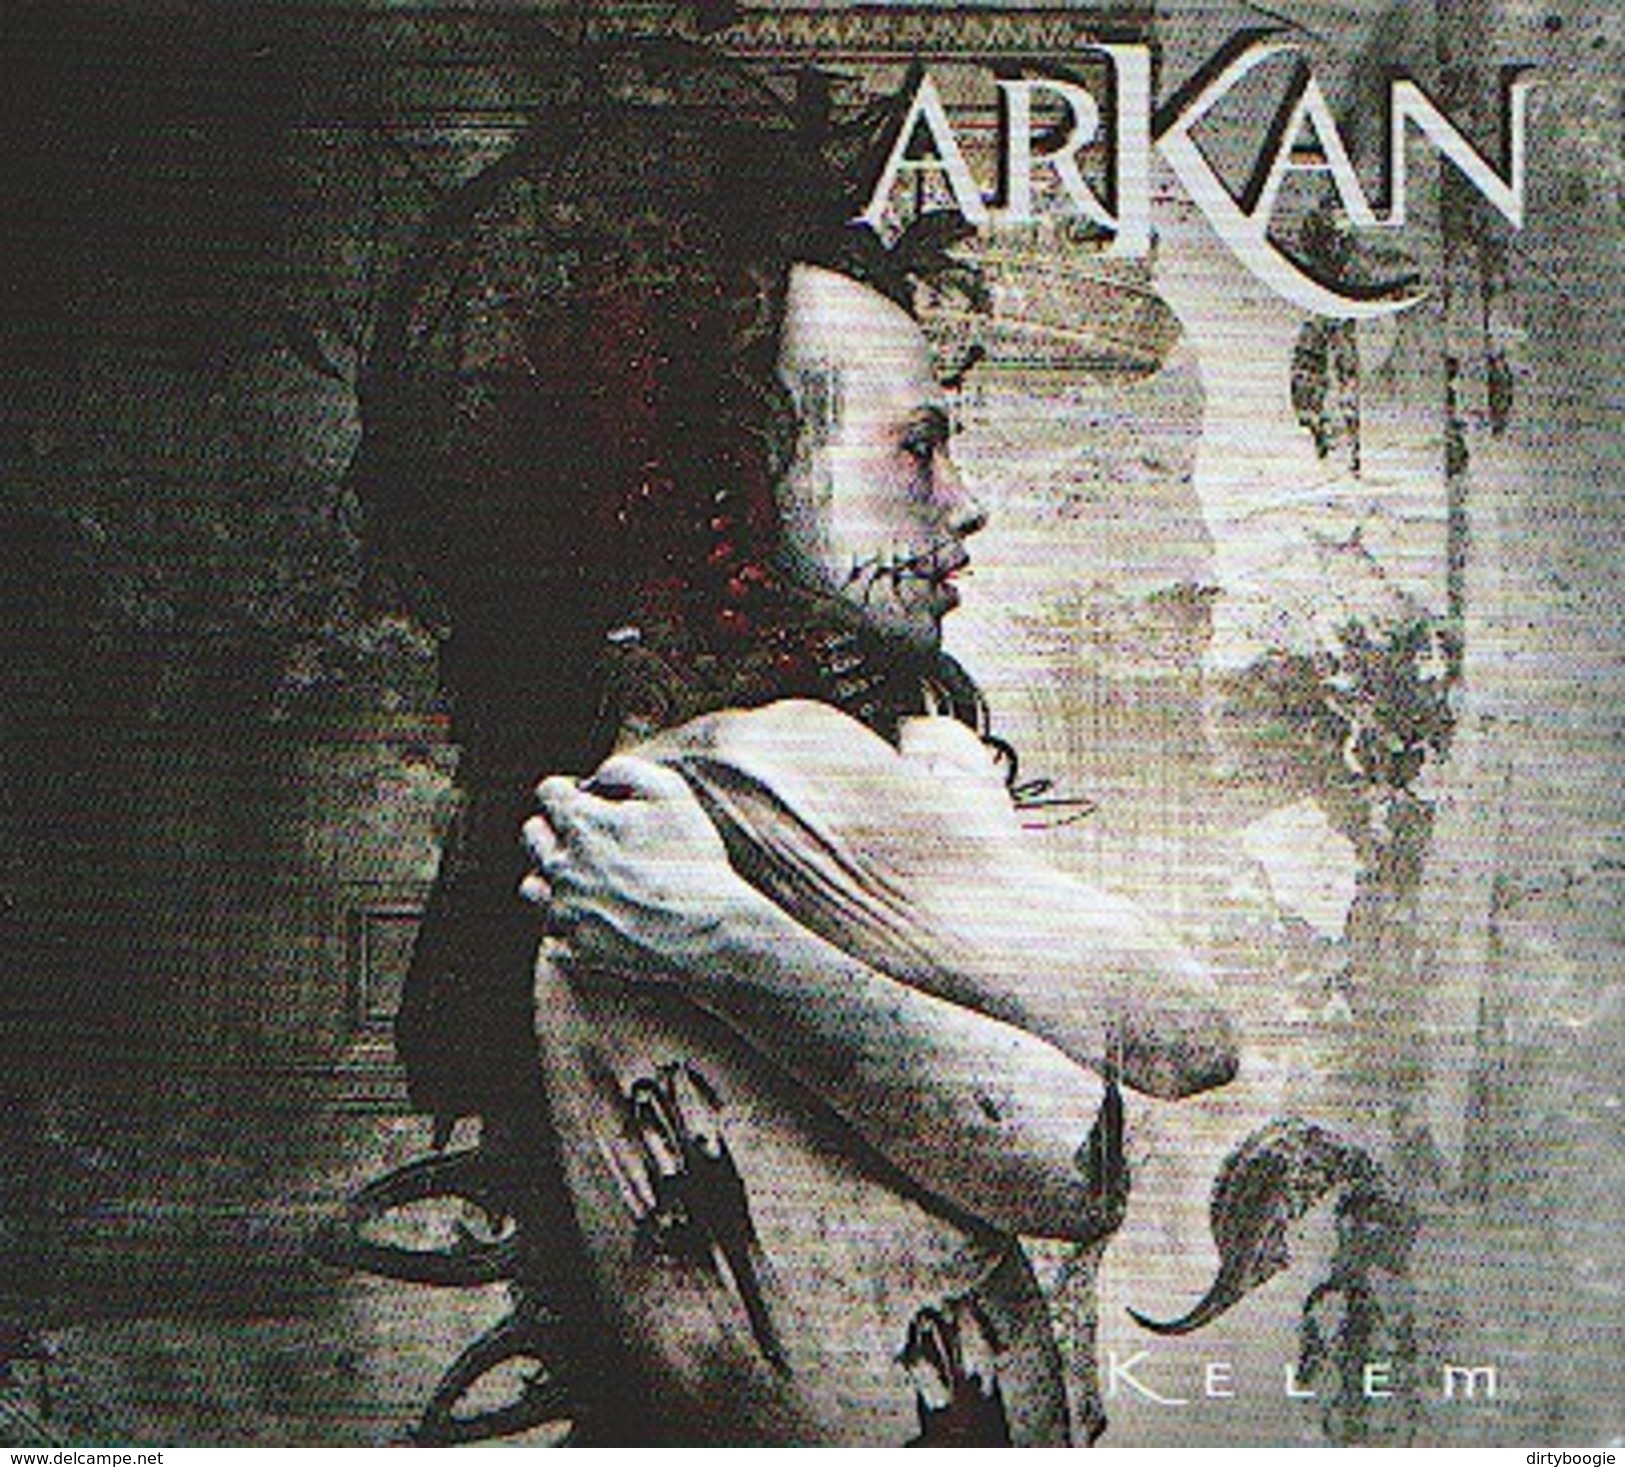 ARKAN - Kelem - CD - METAL ORIENTAL - Hard Rock & Metal